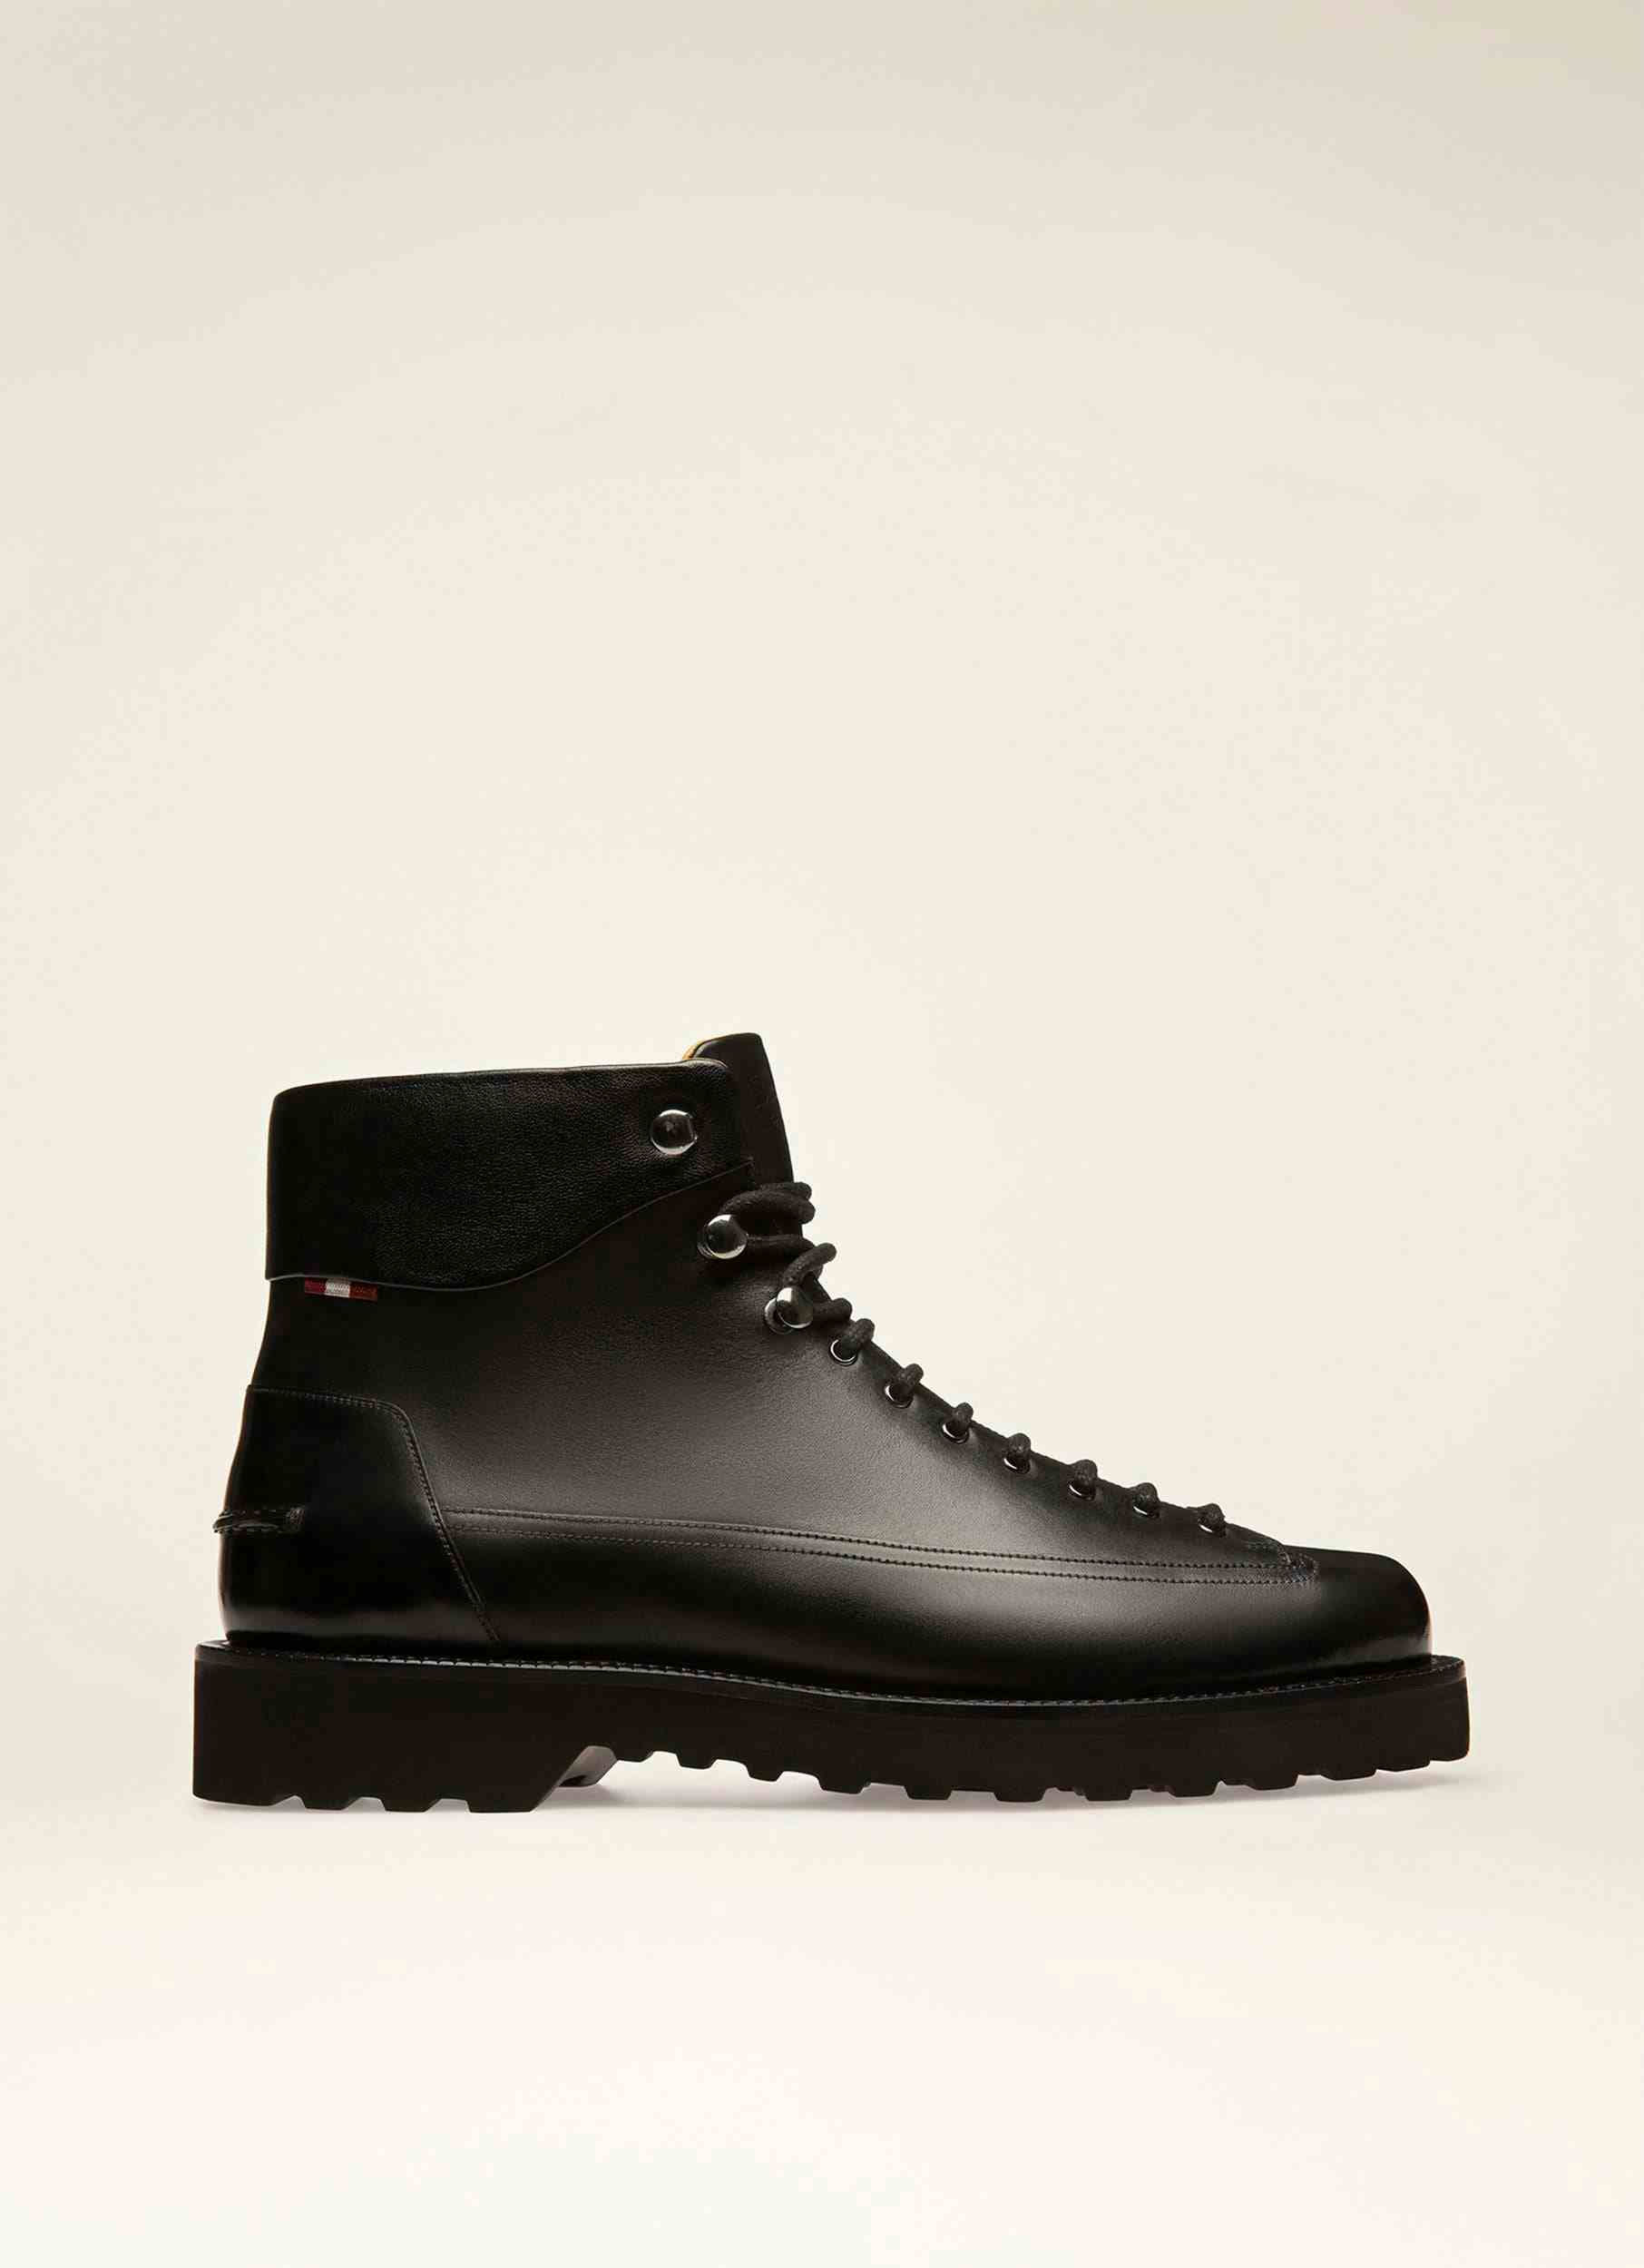 NOTTINGHAM Leather Boots In Black - Men's - Bally